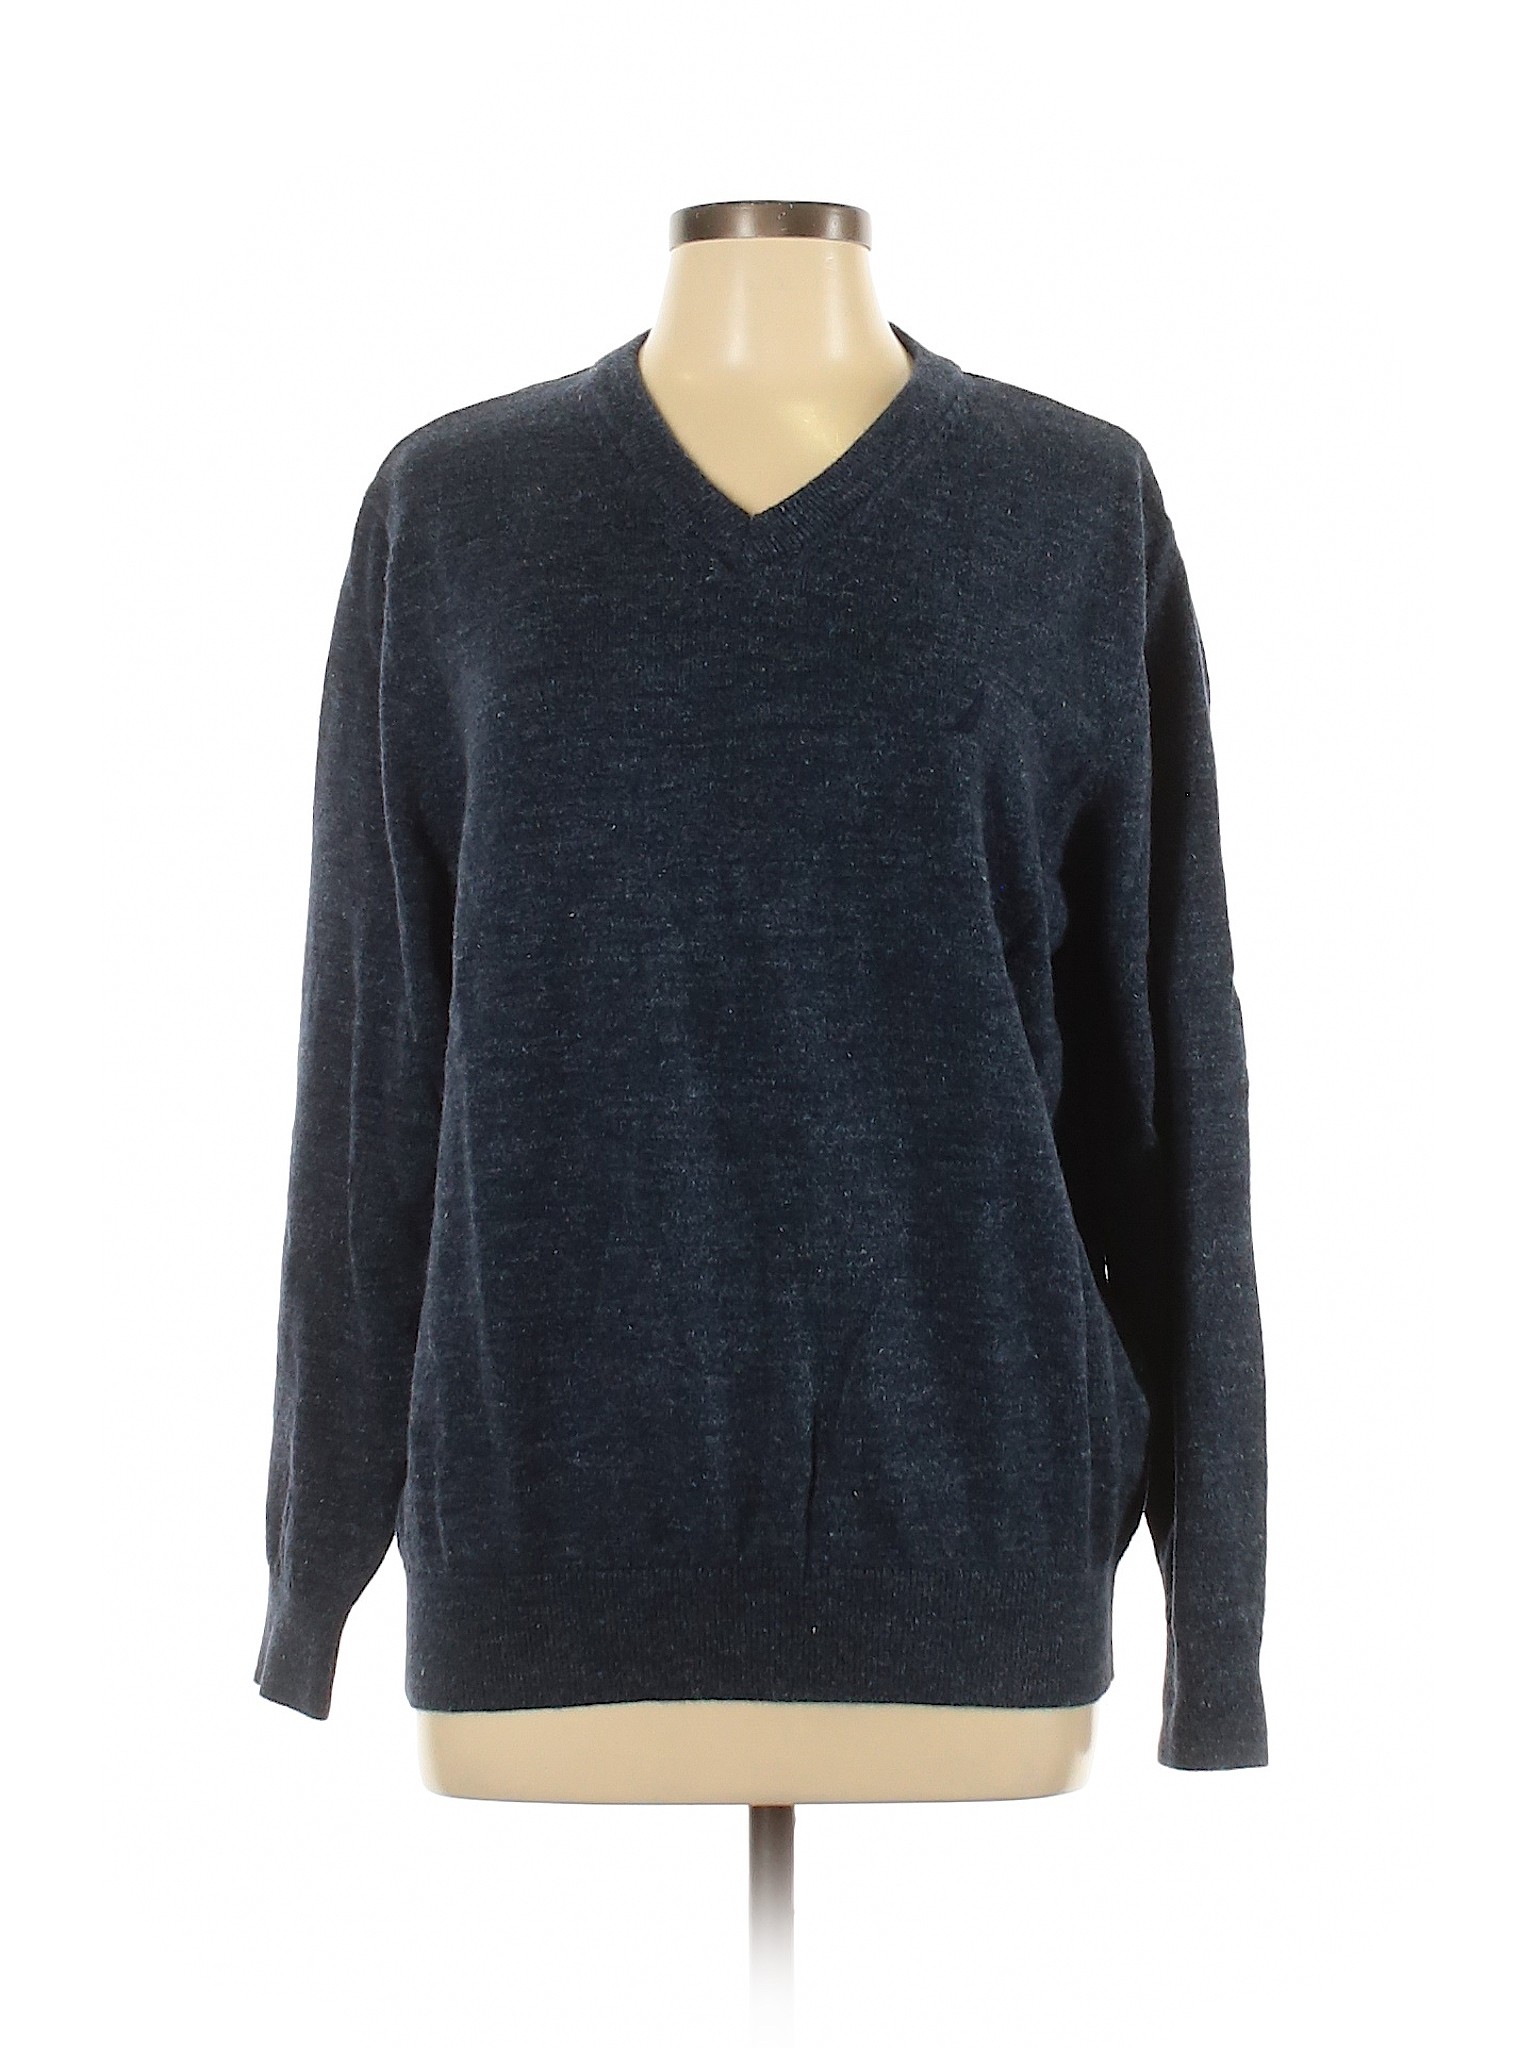 Nautica Women Blue Pullover Sweater L | eBay